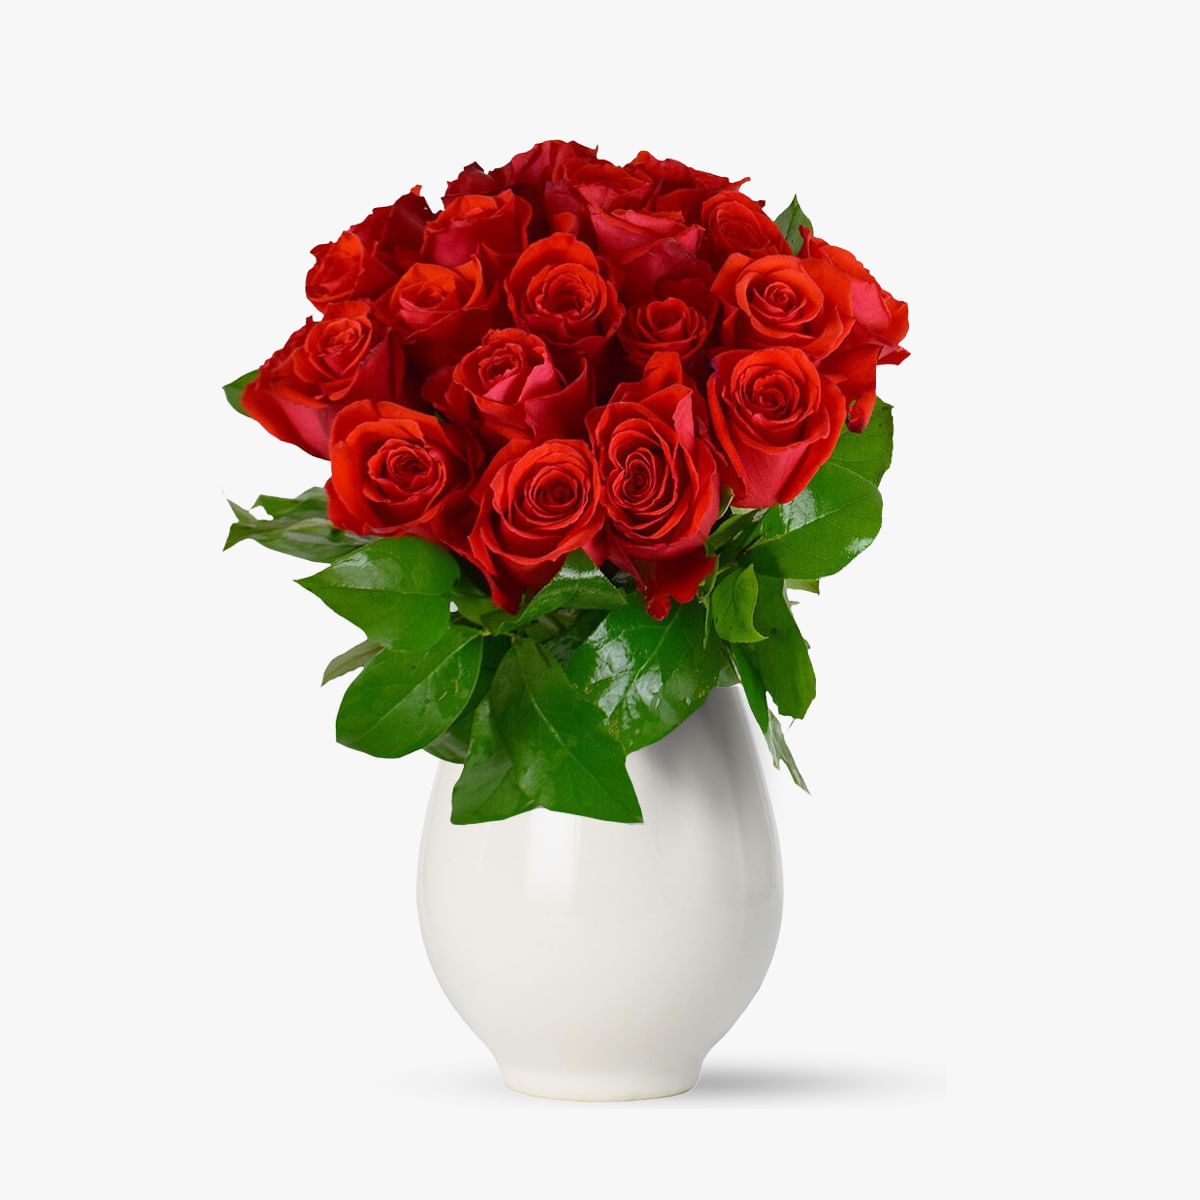 Buchet de 17 trandafiri rosii – Standard Buchet